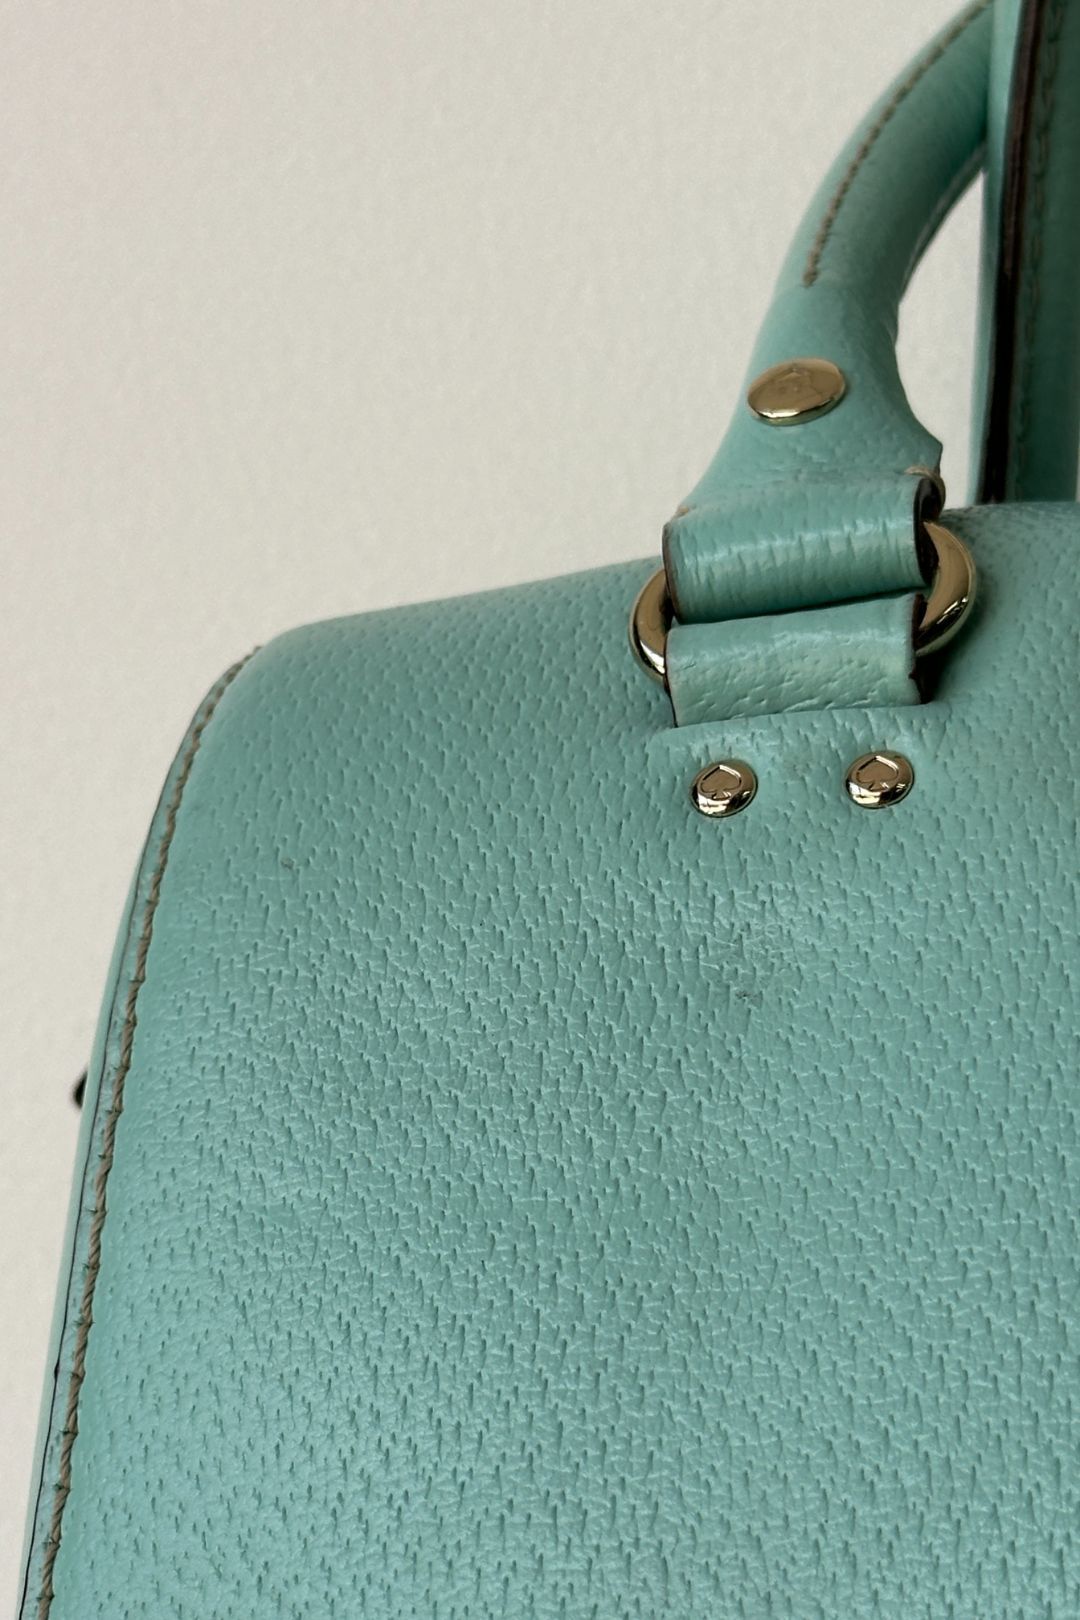 Kate Spade Mint Green Pebbled Leather Handbag